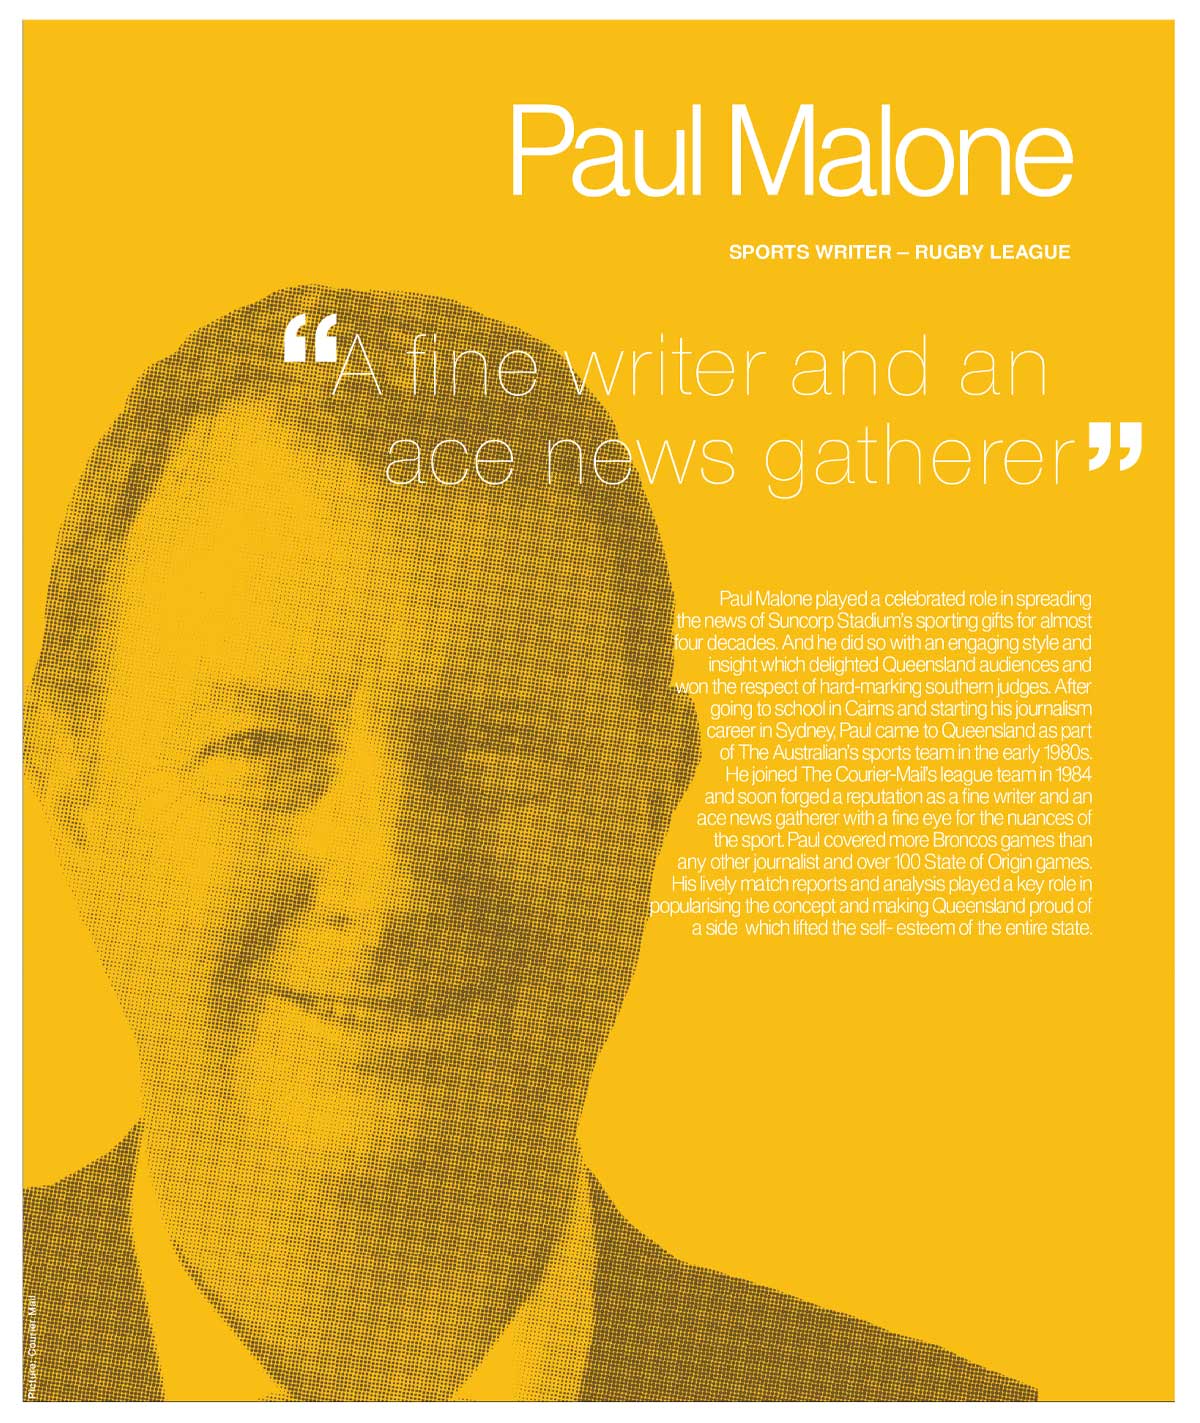 Paul Malone suncorp stadium media hall of fame